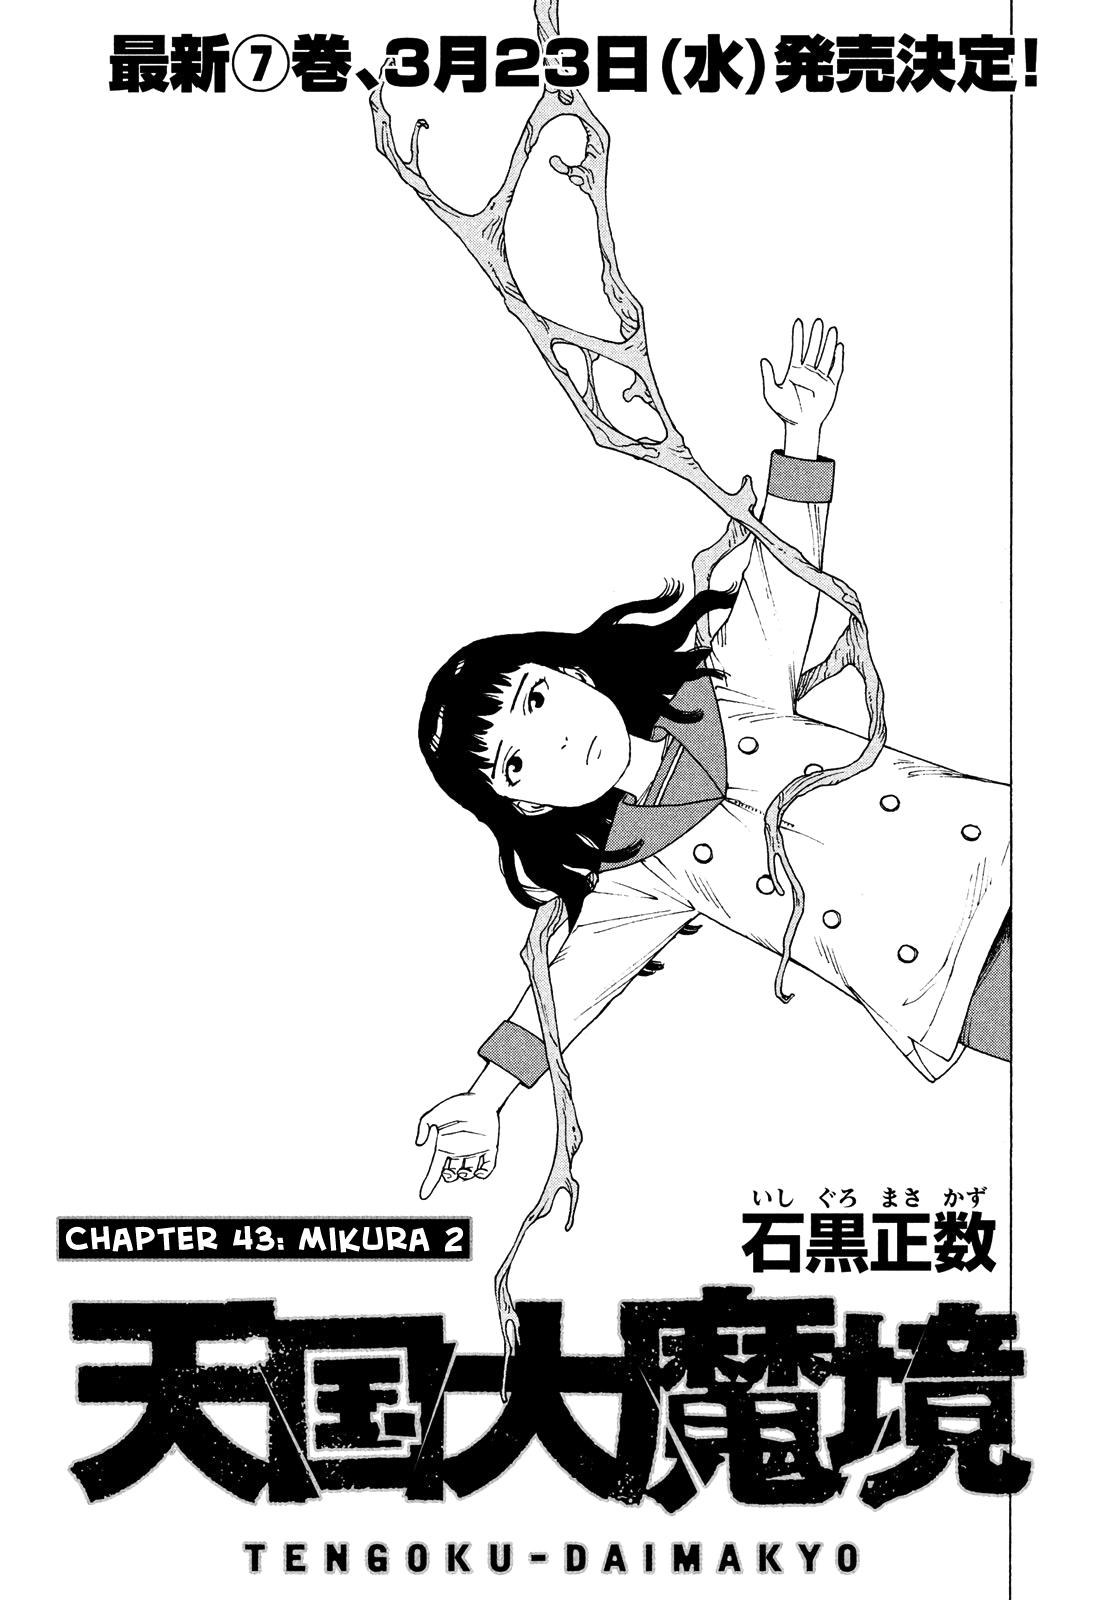 Tengoku Daimakyou Vol.7 Chapter 43: Mikura ➁ page 1 - Mangakakalot